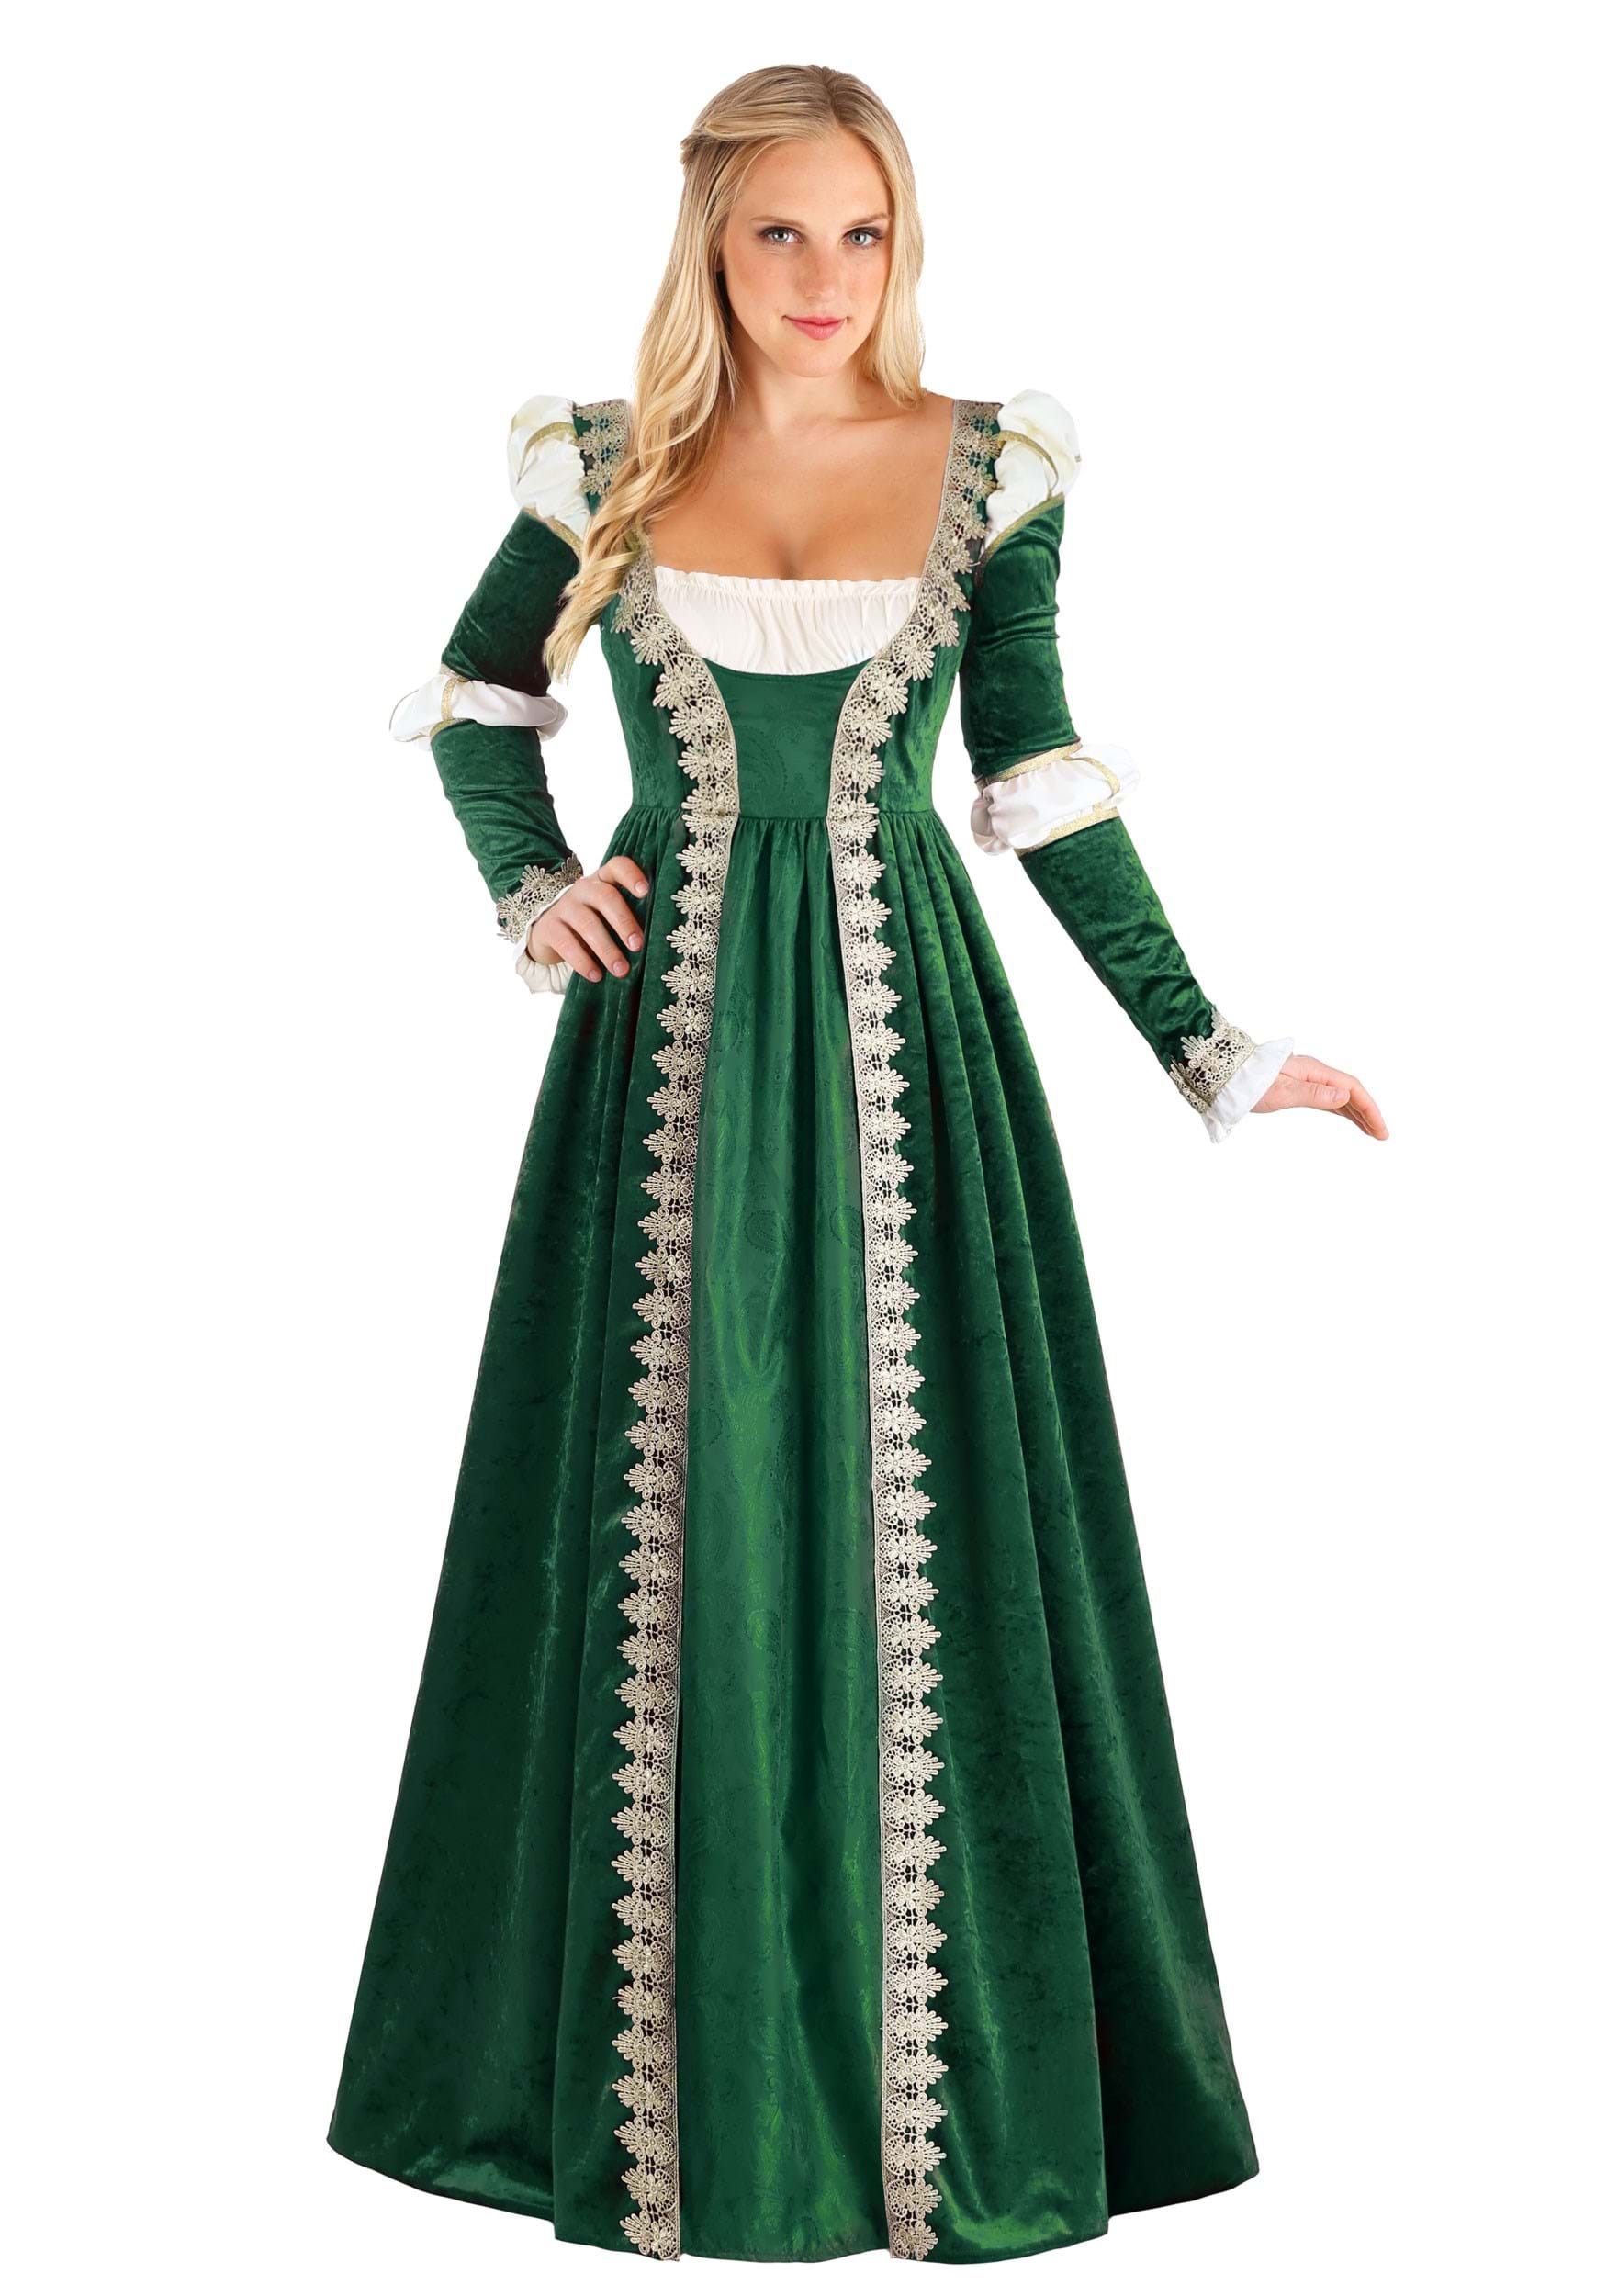 Women's Emerald Maiden Fancy Dress Costume